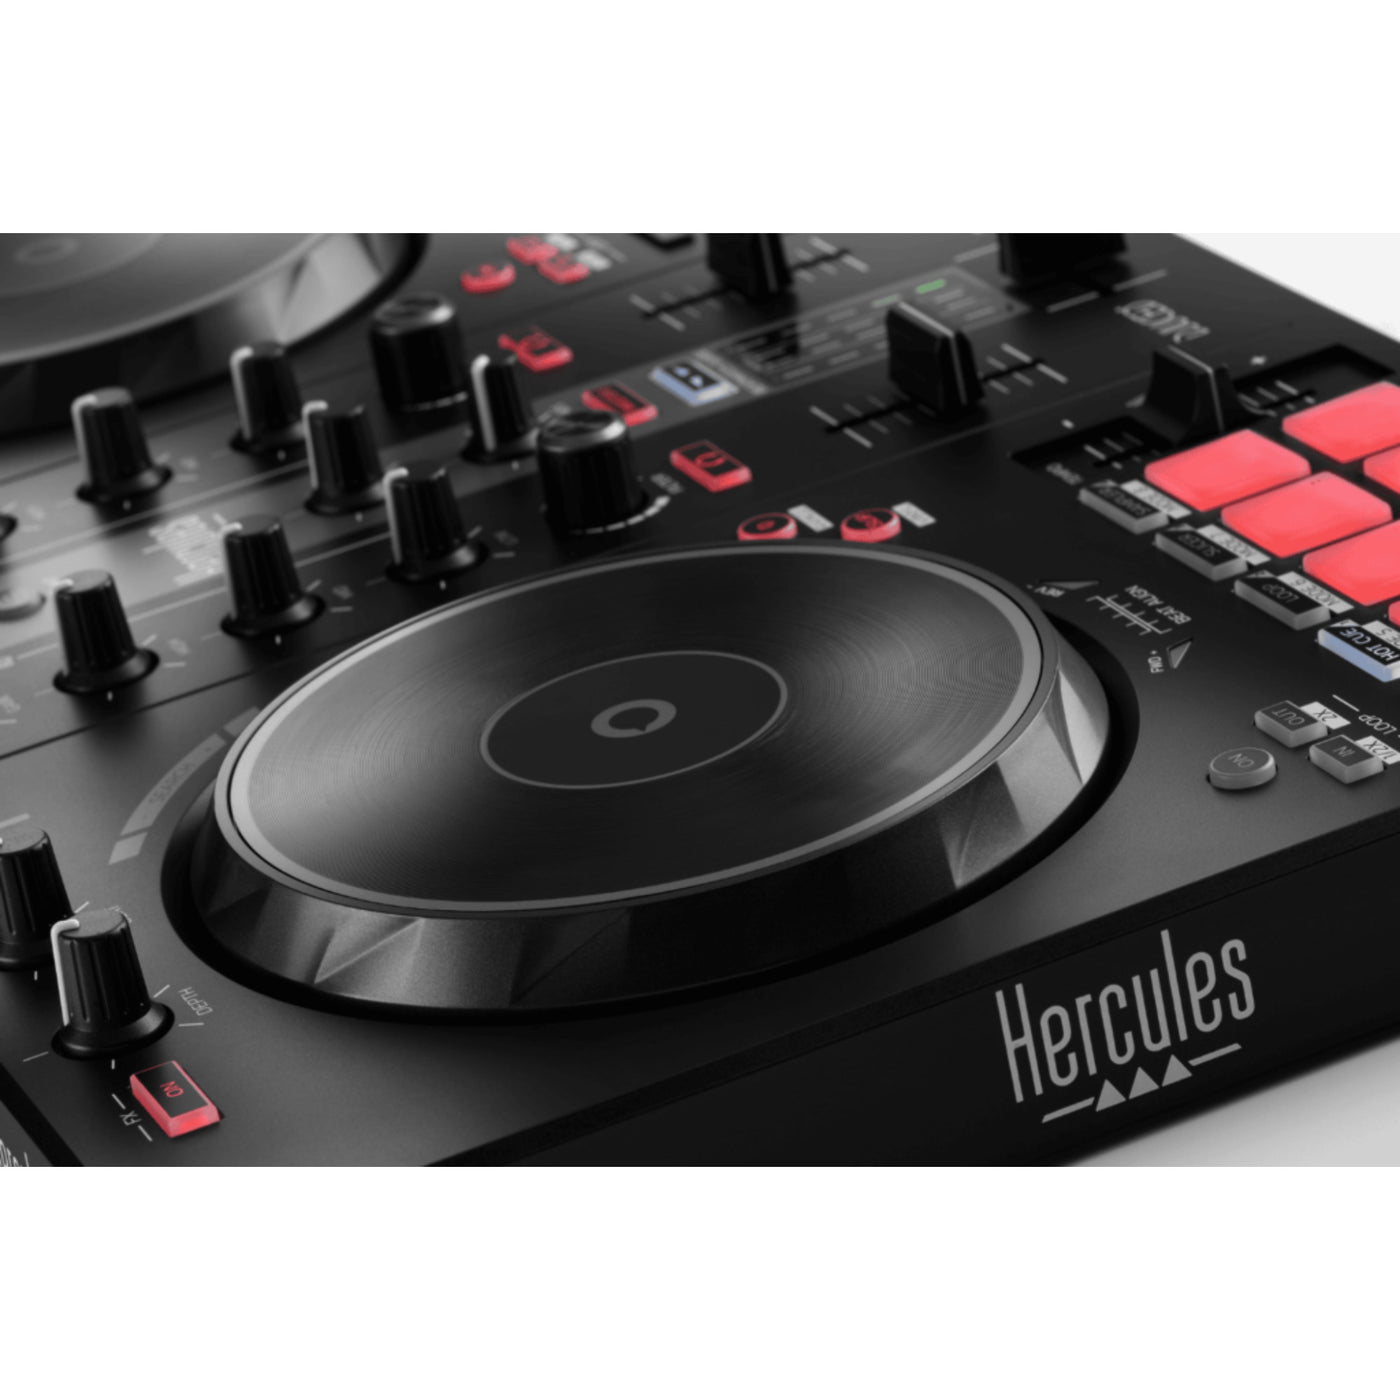 Hercules DJ DJControl Inpulse 300 MK2 Mixer for Djing